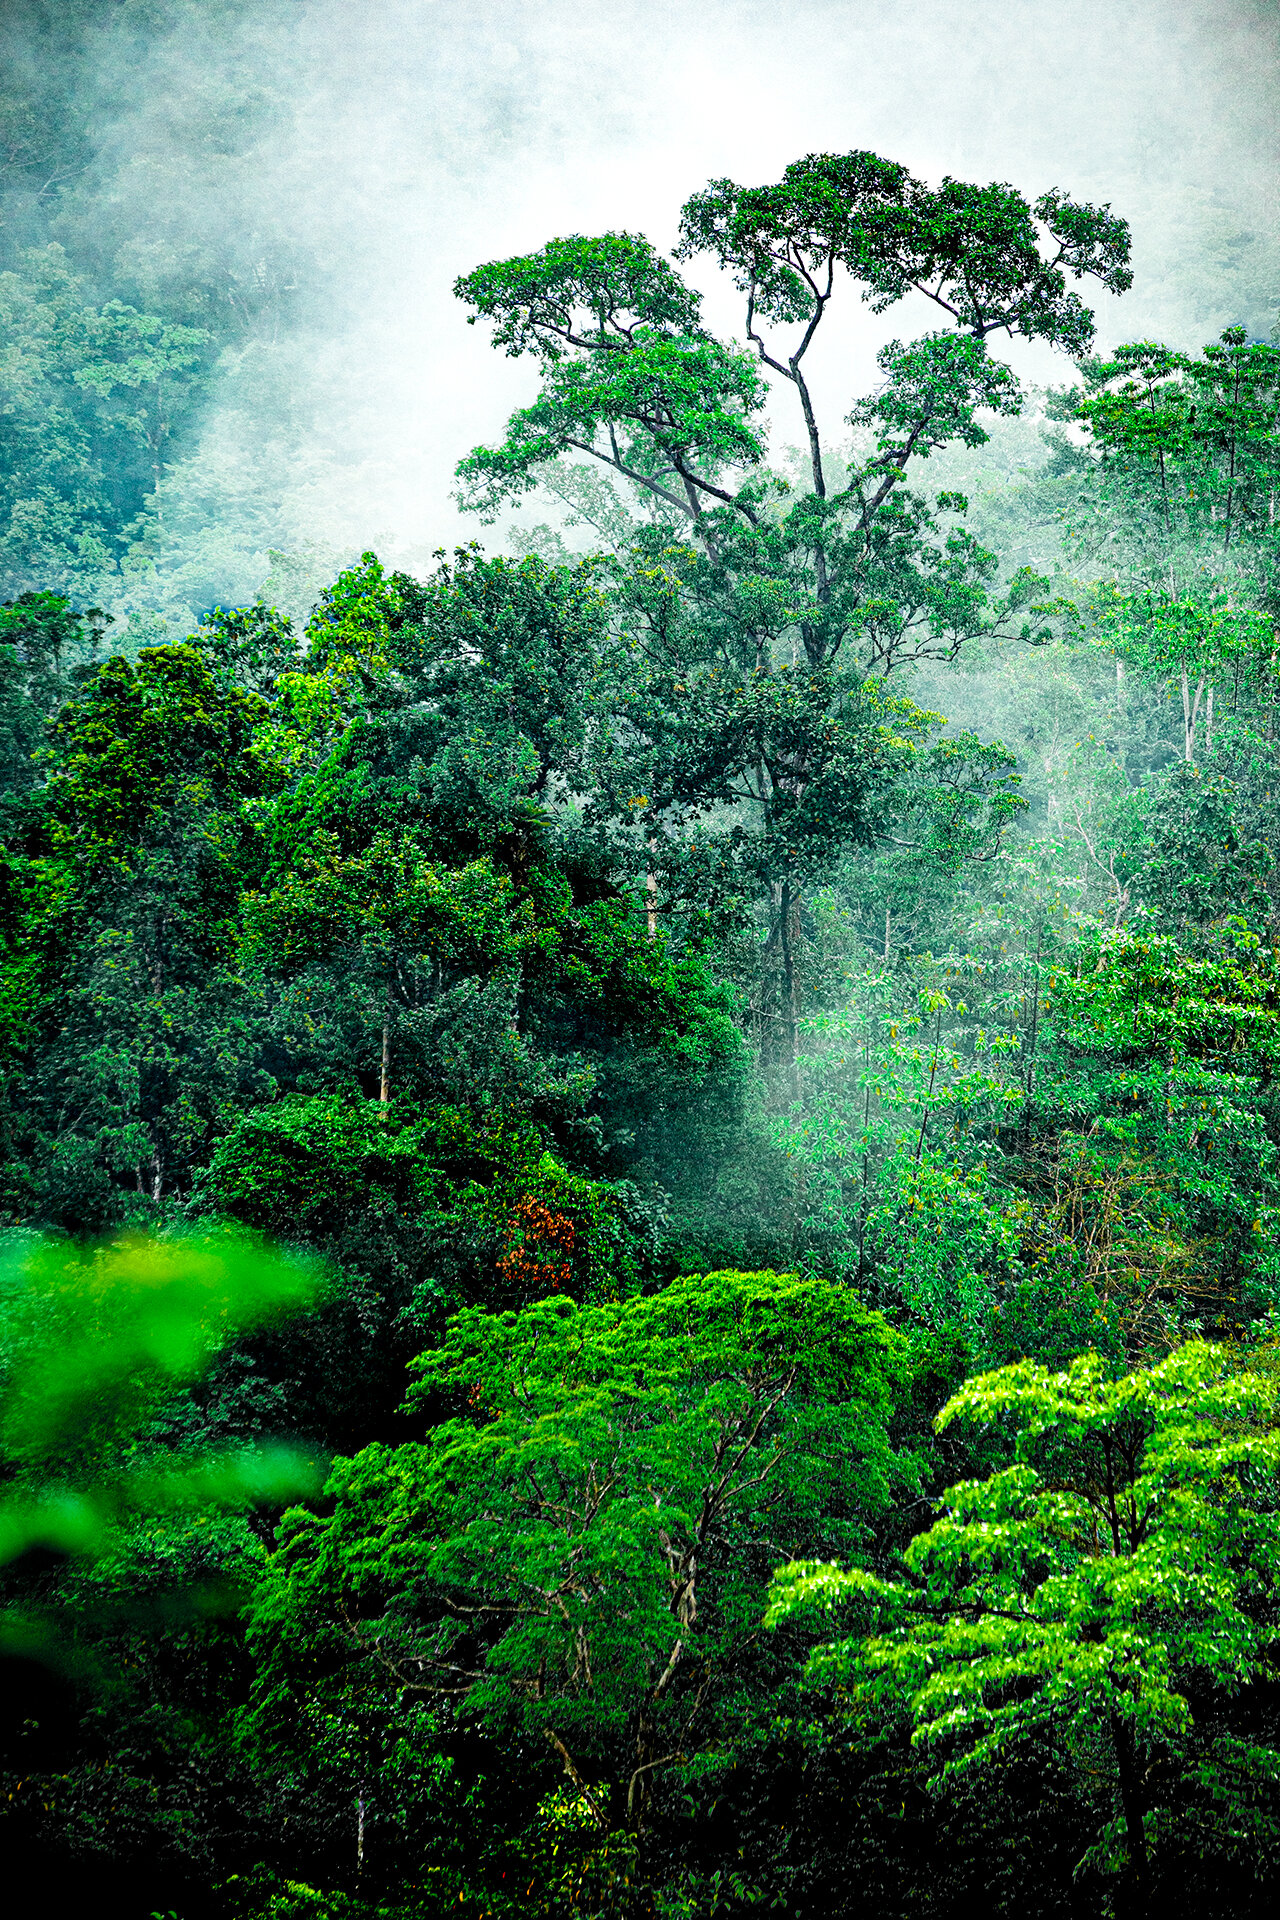 Primary Tropical Rainforest - Sinharaja Forest Reserve, Sri Lanka